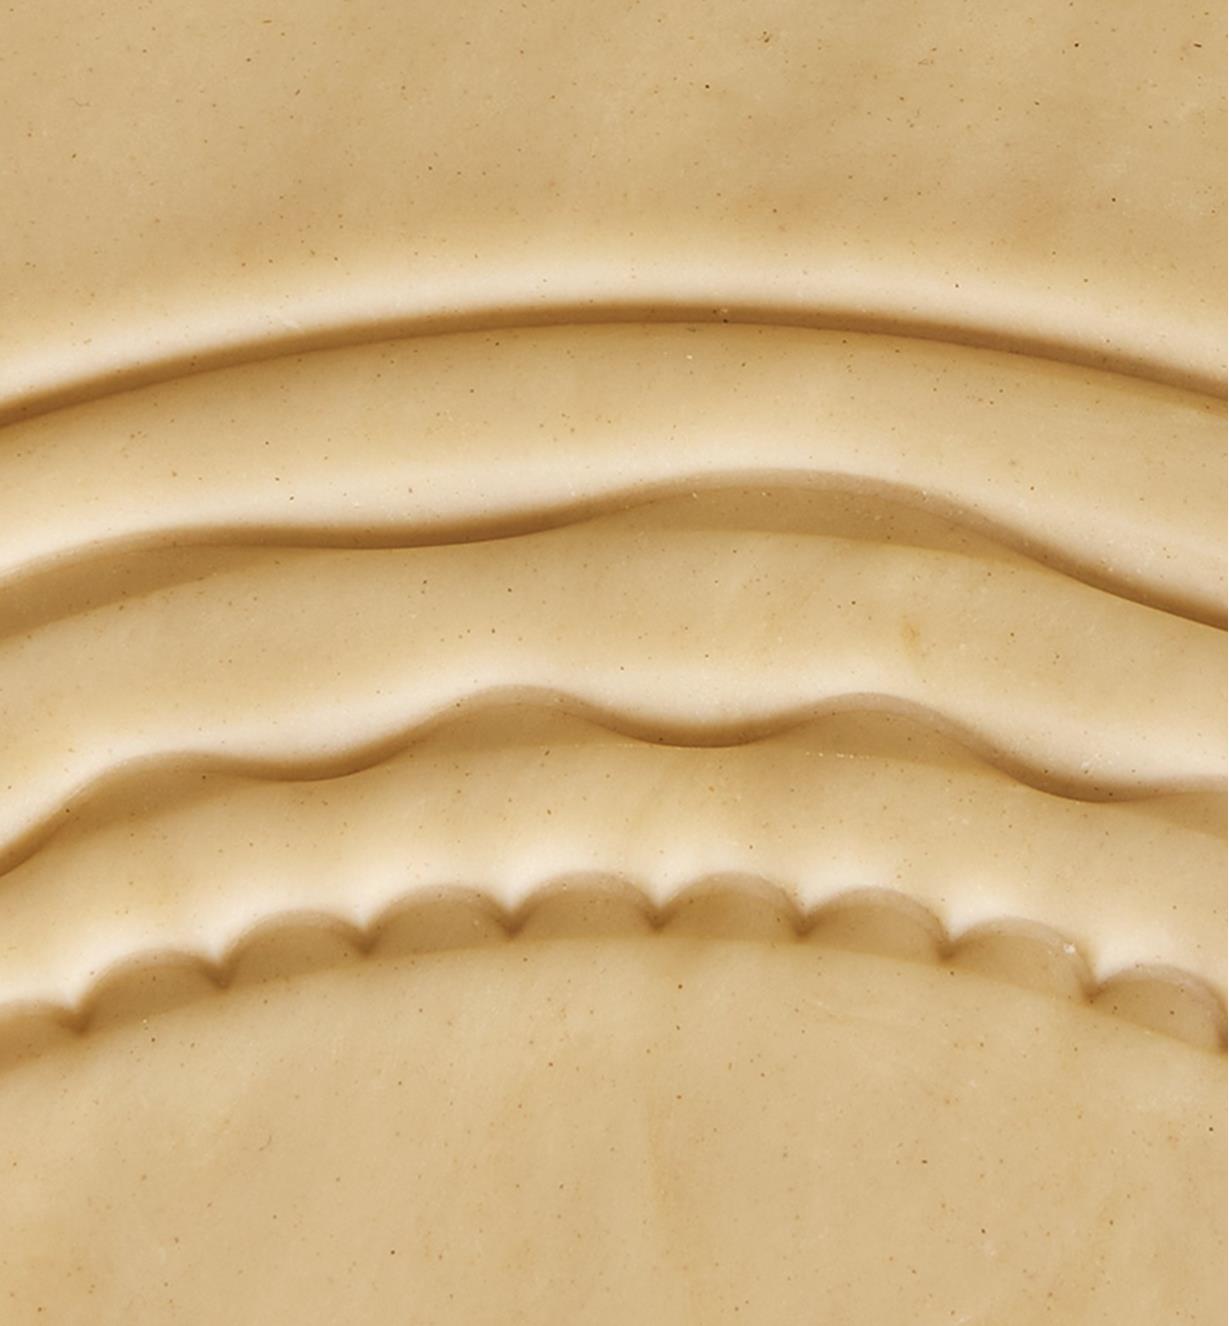 Four different patterns cut into dough